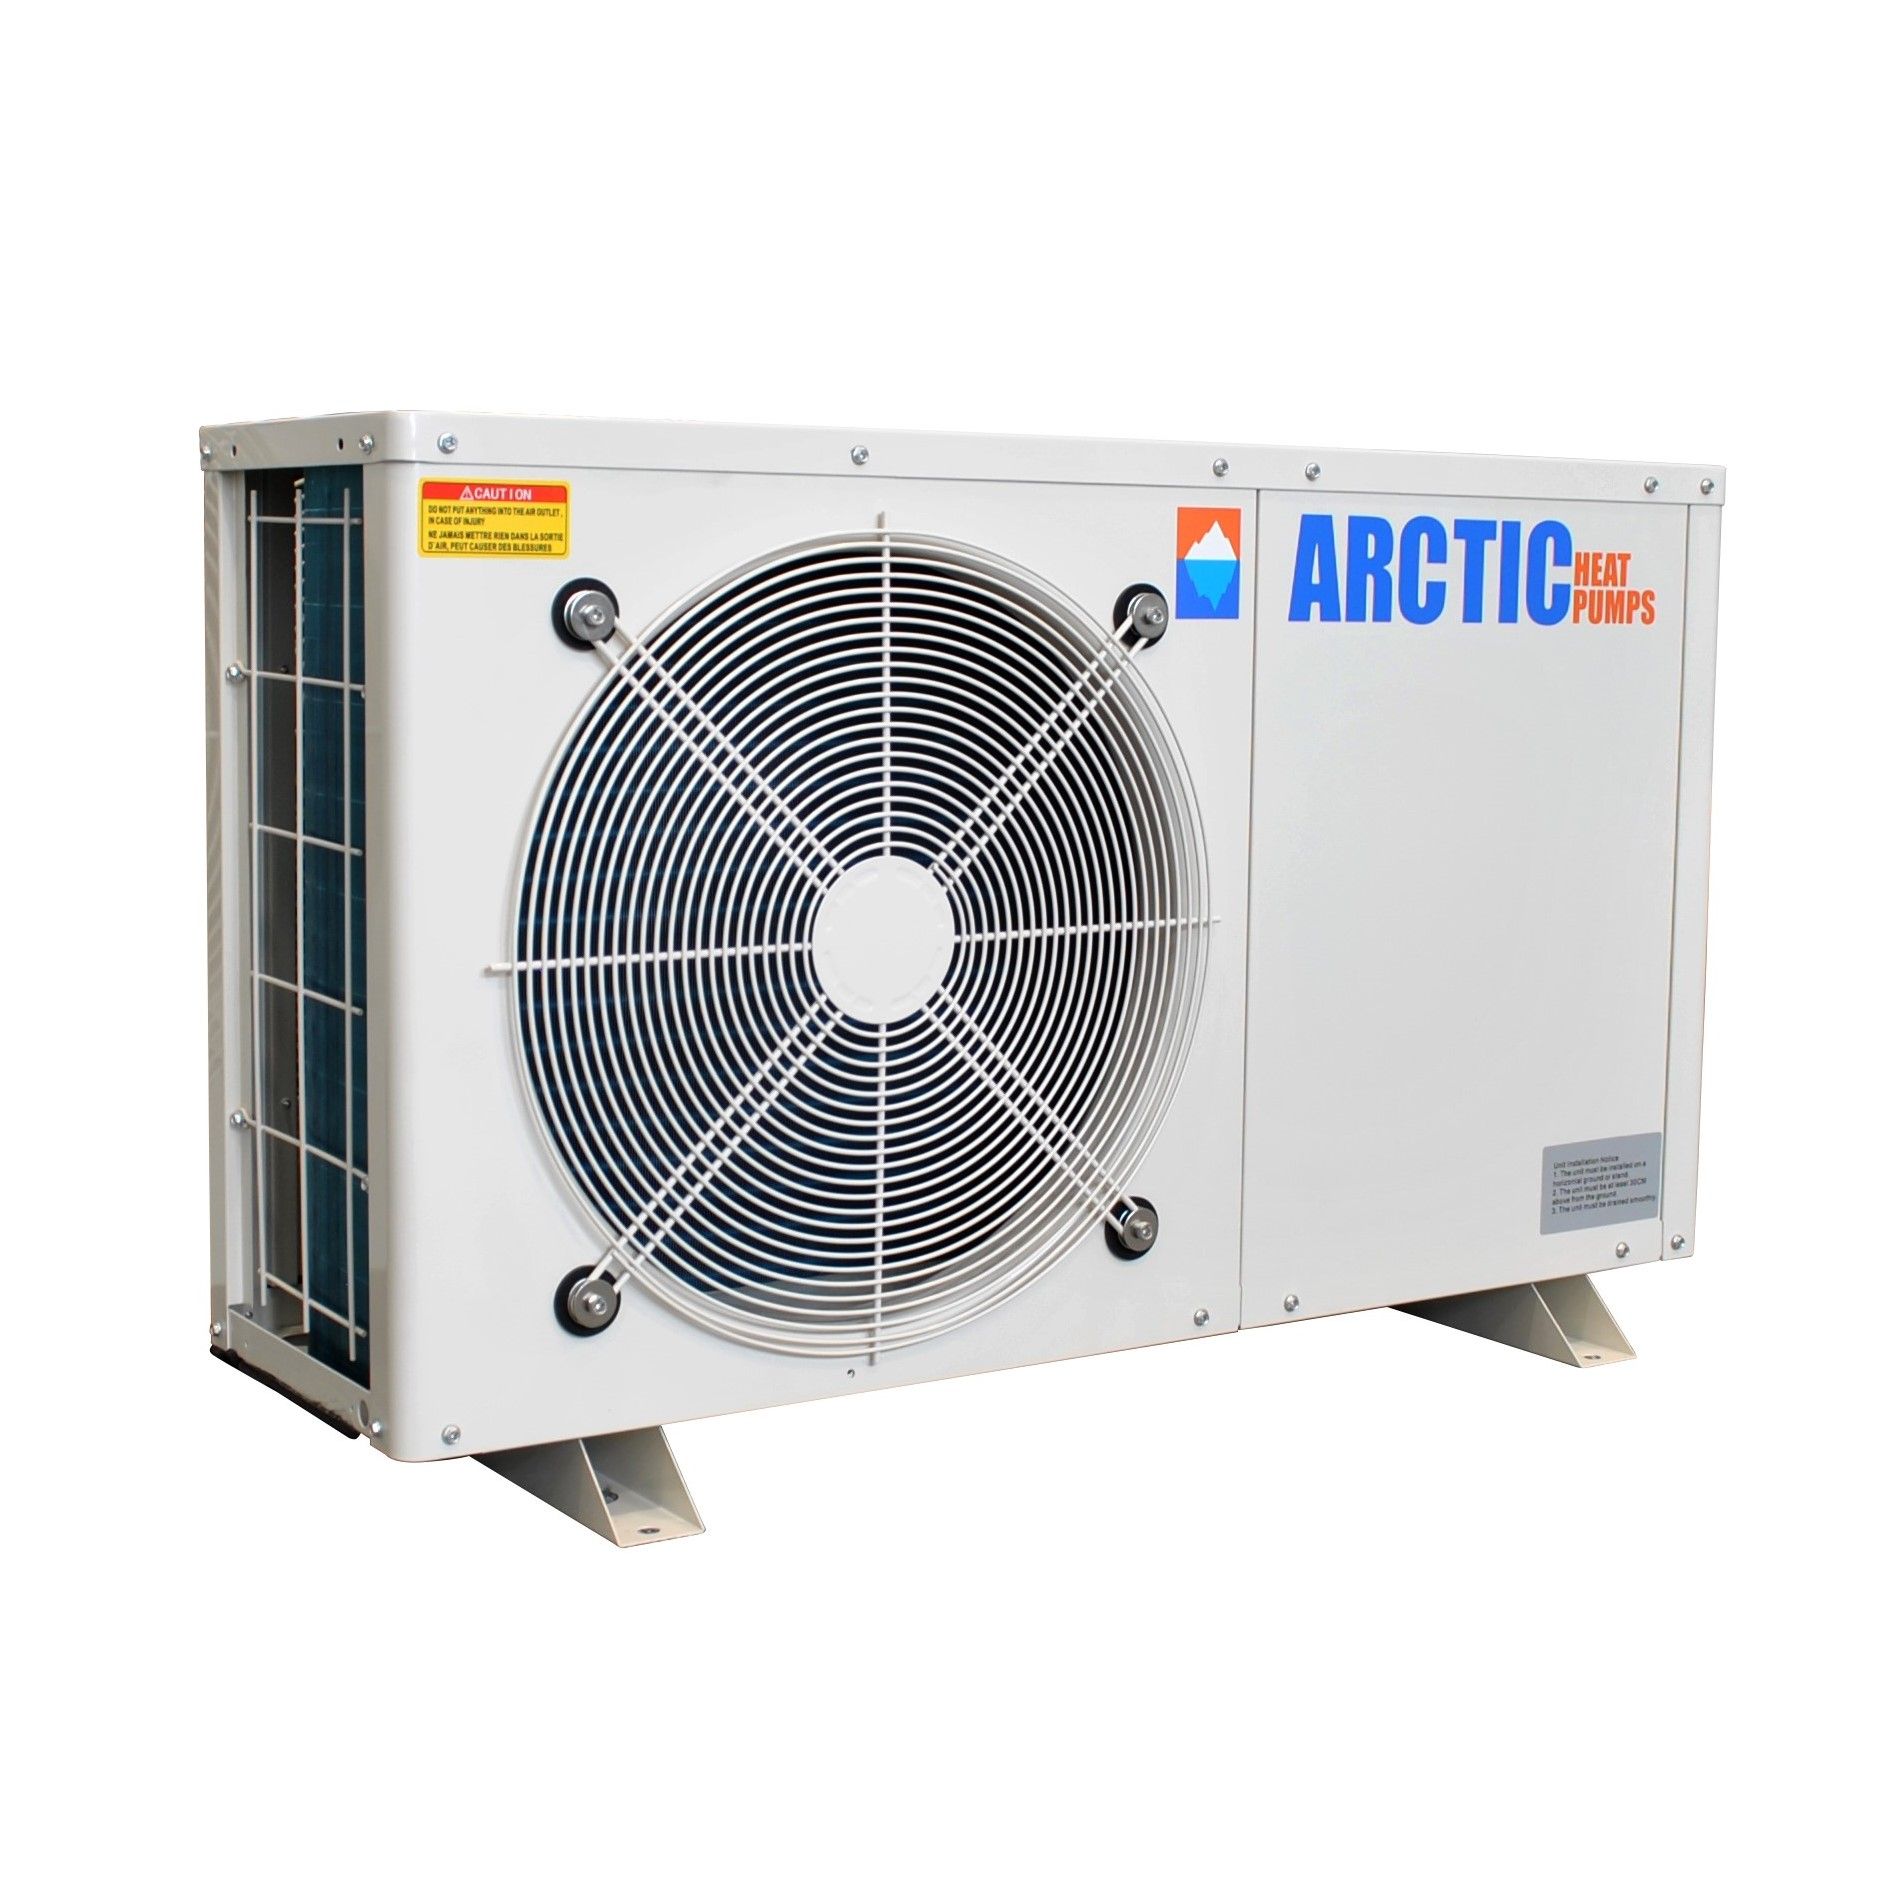 Arctic Titanium Heat Pump for Swimming Pools and Spas - 015ZA/B